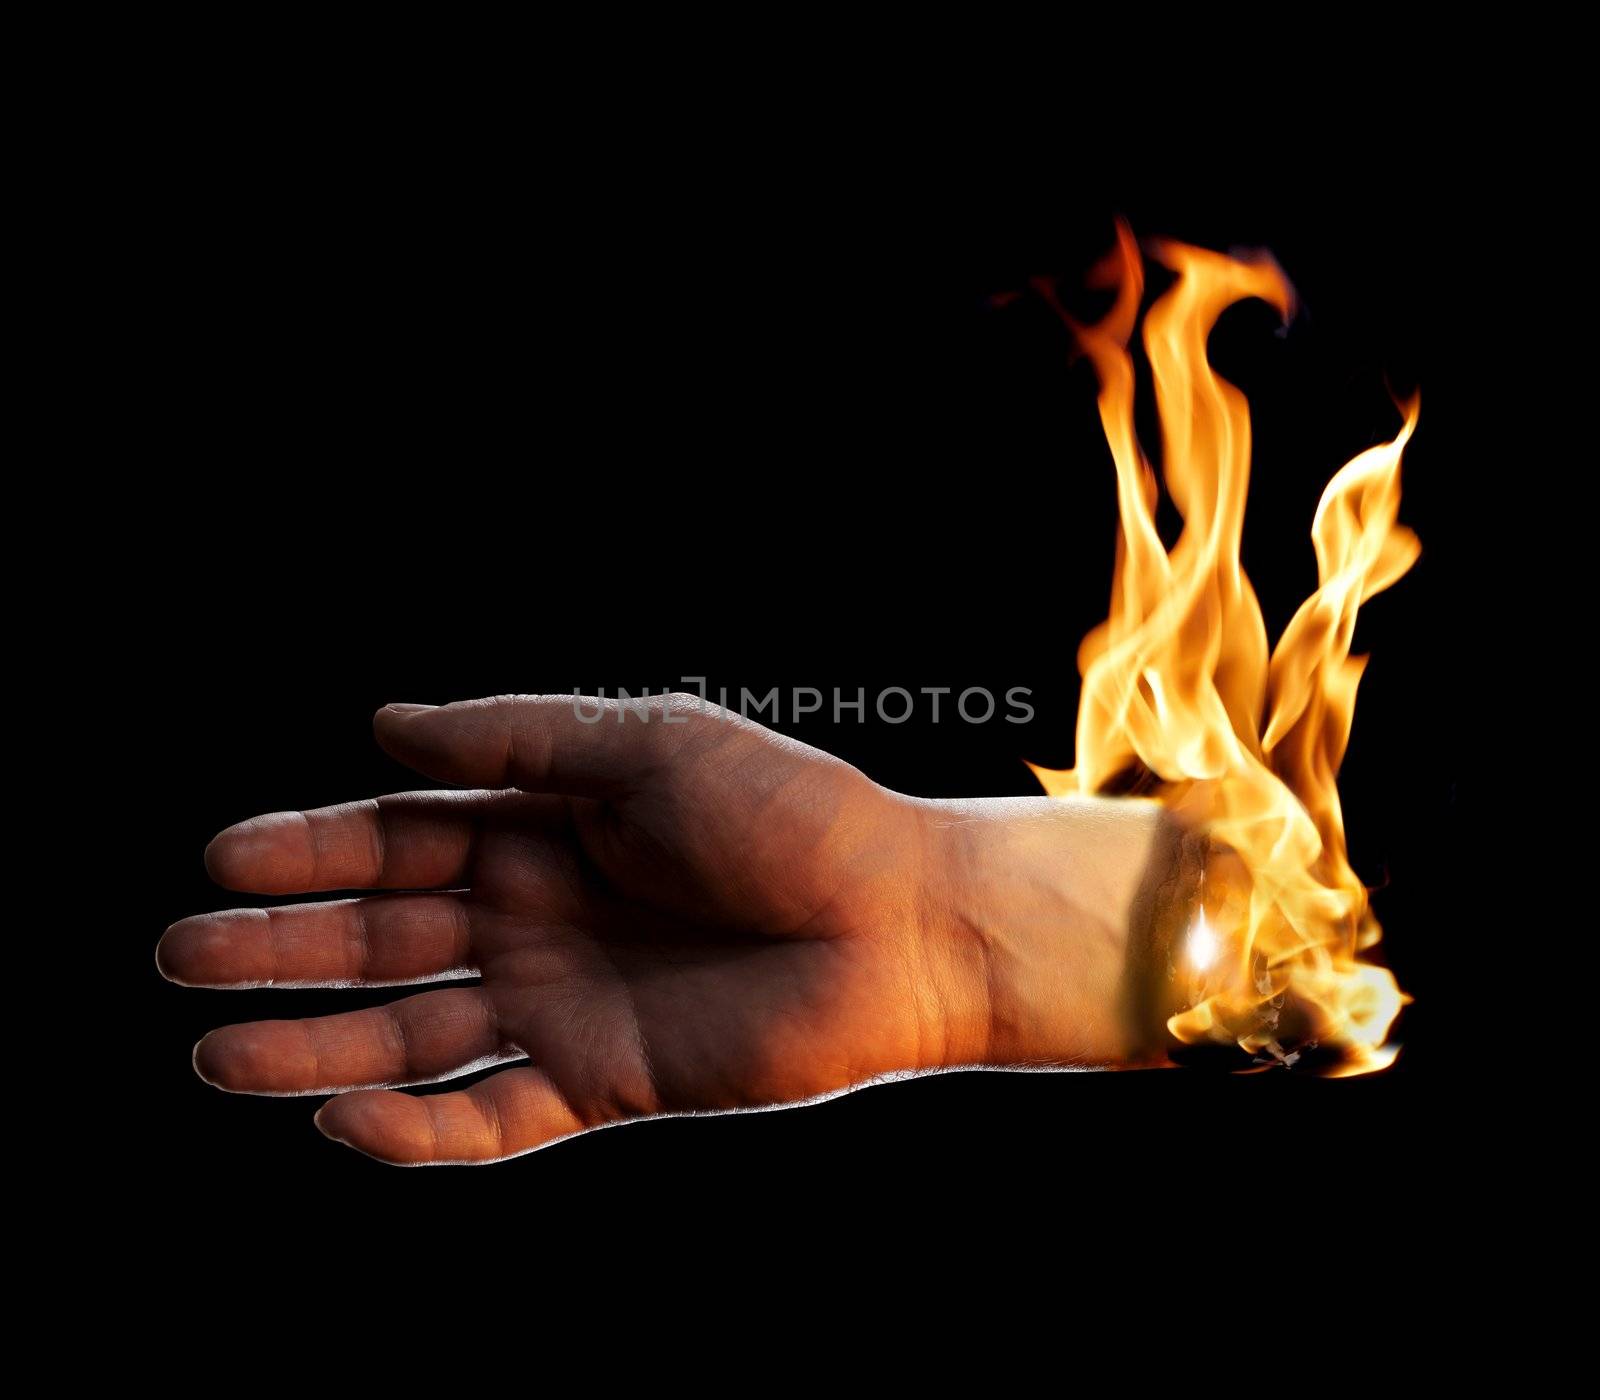 A Burning hand on black background.